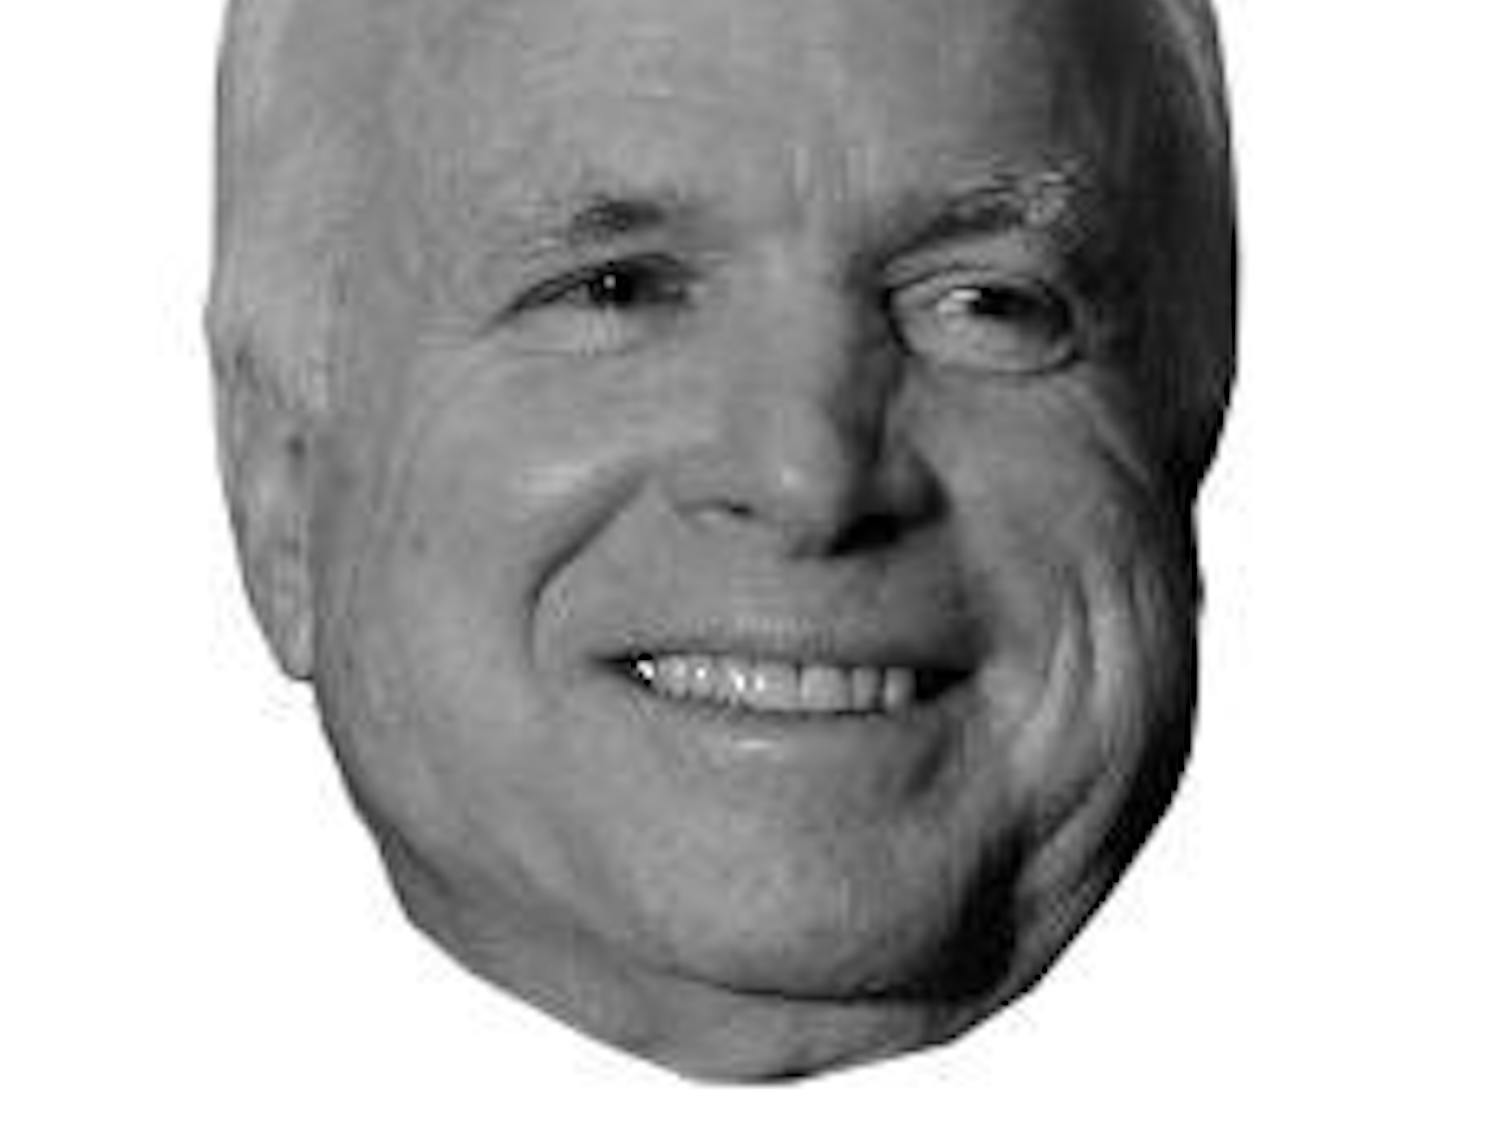 McCainHead.jpg